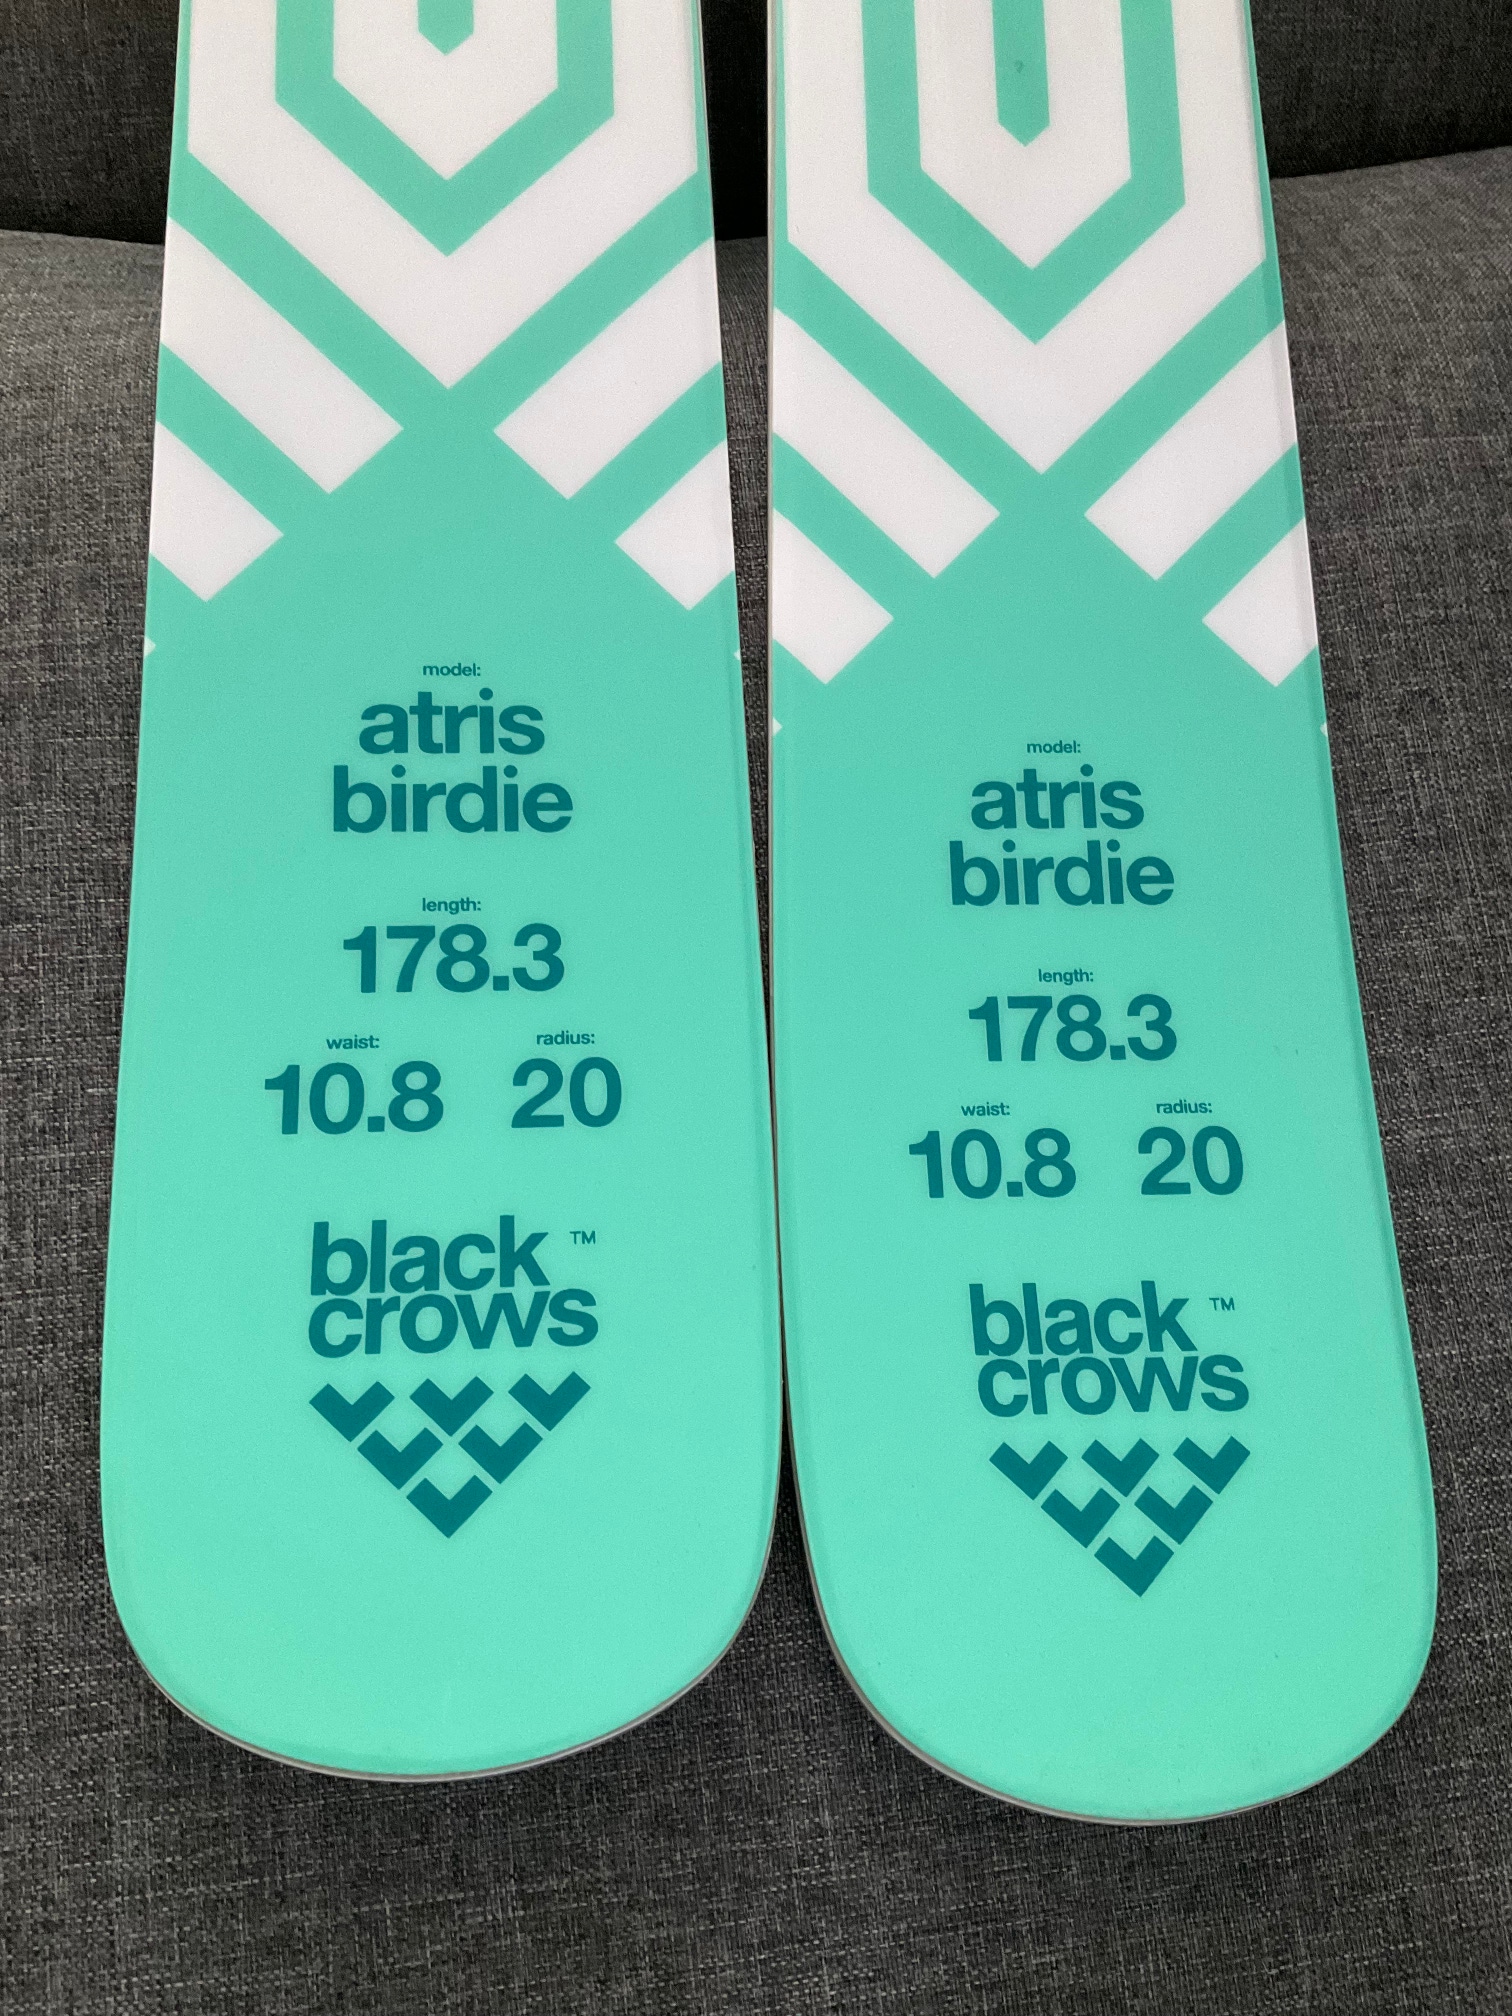 Used Unisex Black Crows 178 cm Atris Birdie Skis Without Bindings